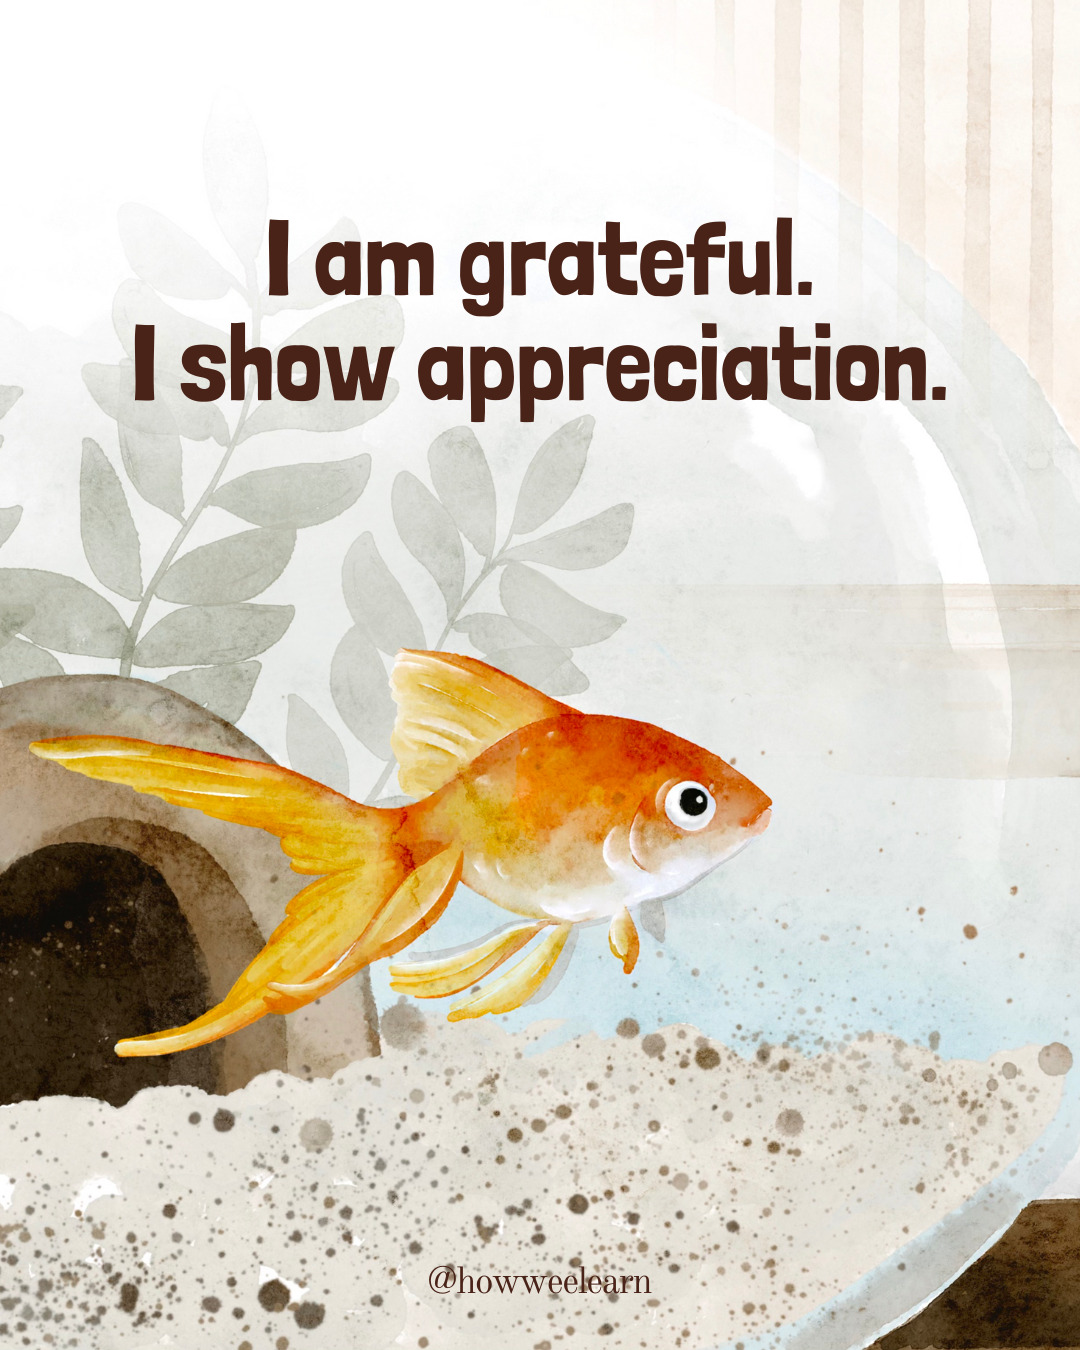 I am grateful. I show appreciation.